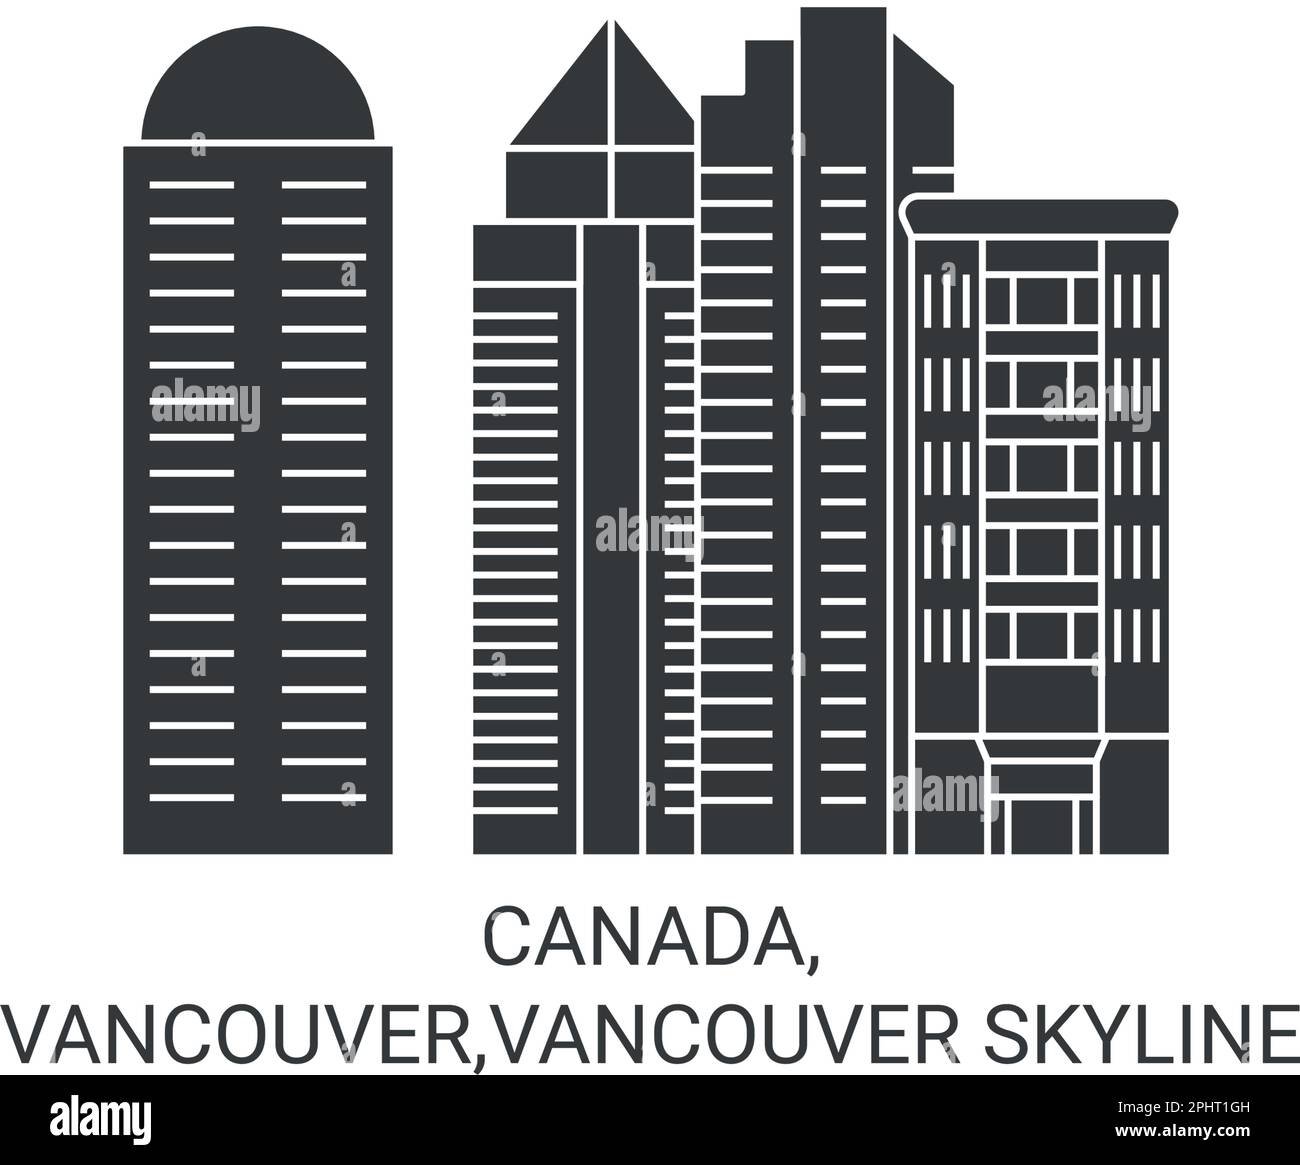 Canada, Vancouver,Vancouver Skyline travel landmark vector illustration Stock Vector